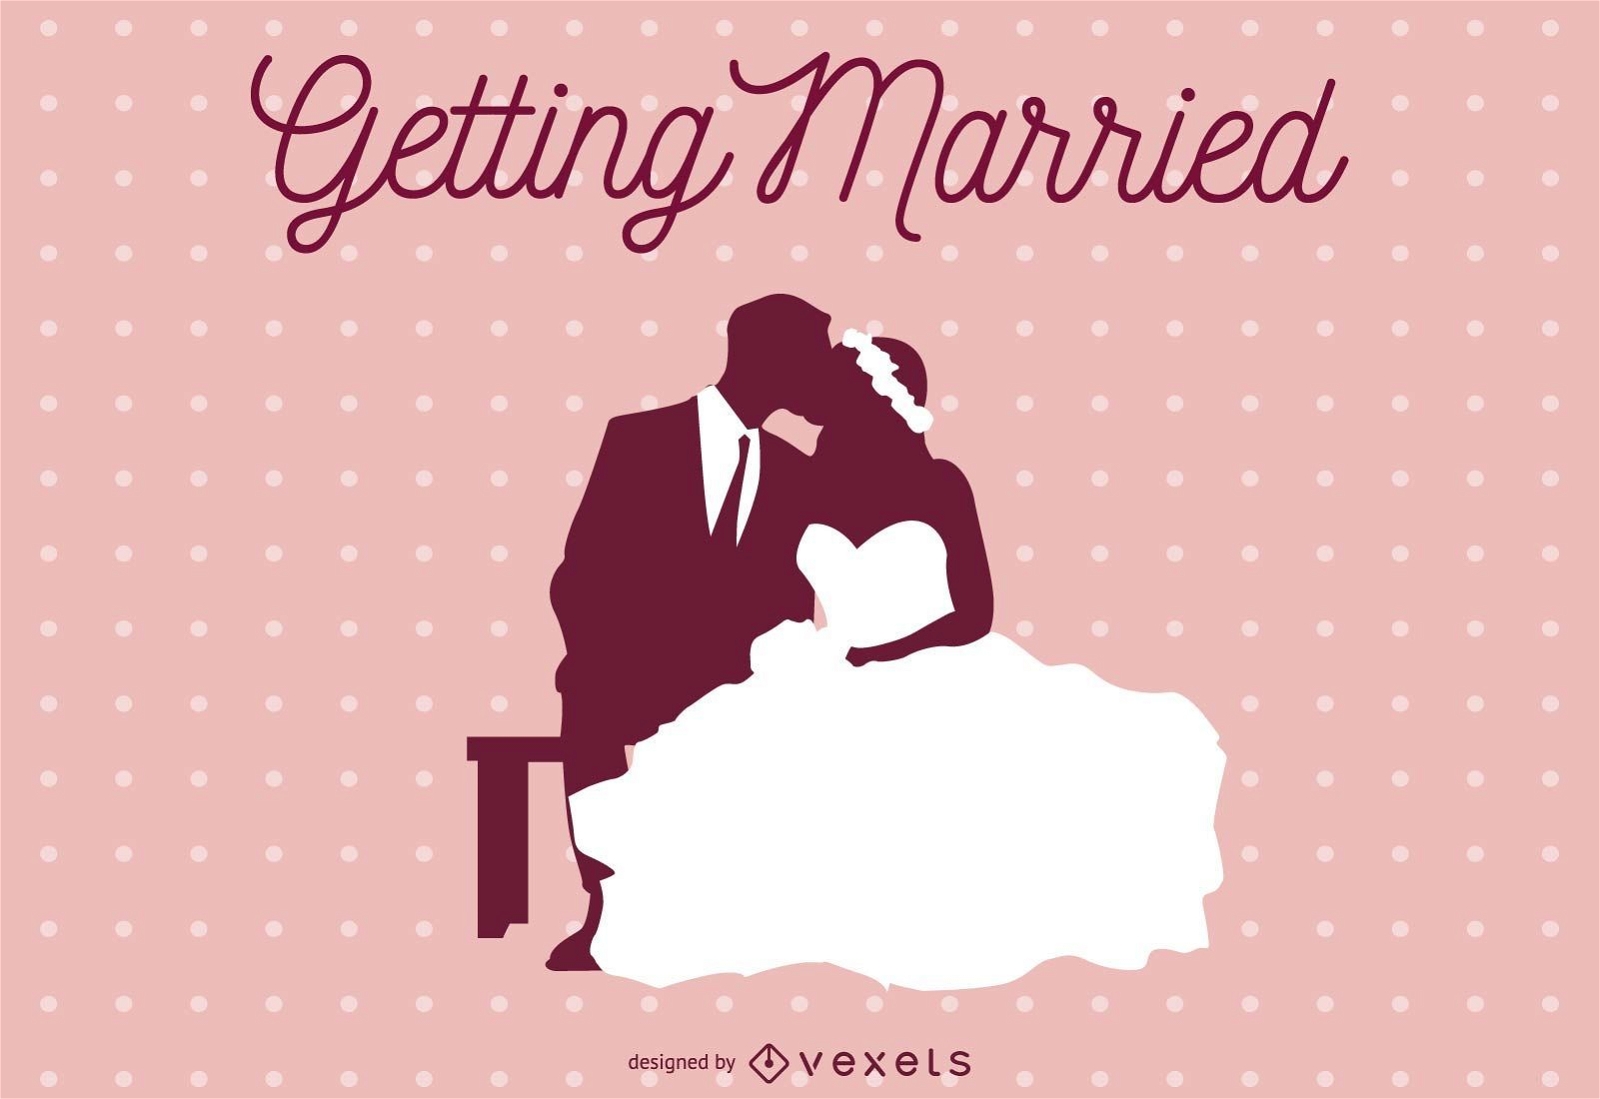 Getting married illustration design